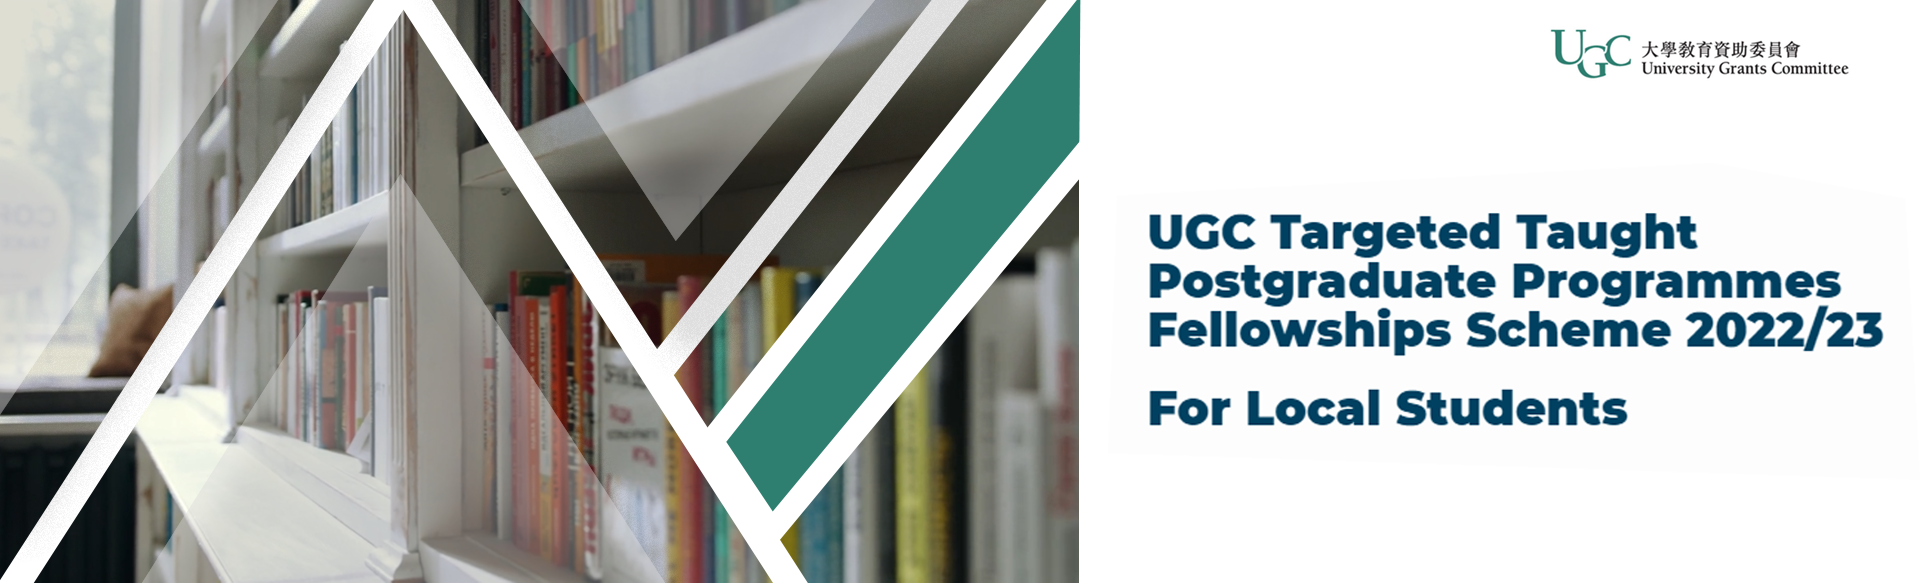 UGC Targeted Taught Postgraduate Programmes Fellowships Scheme 2022/23